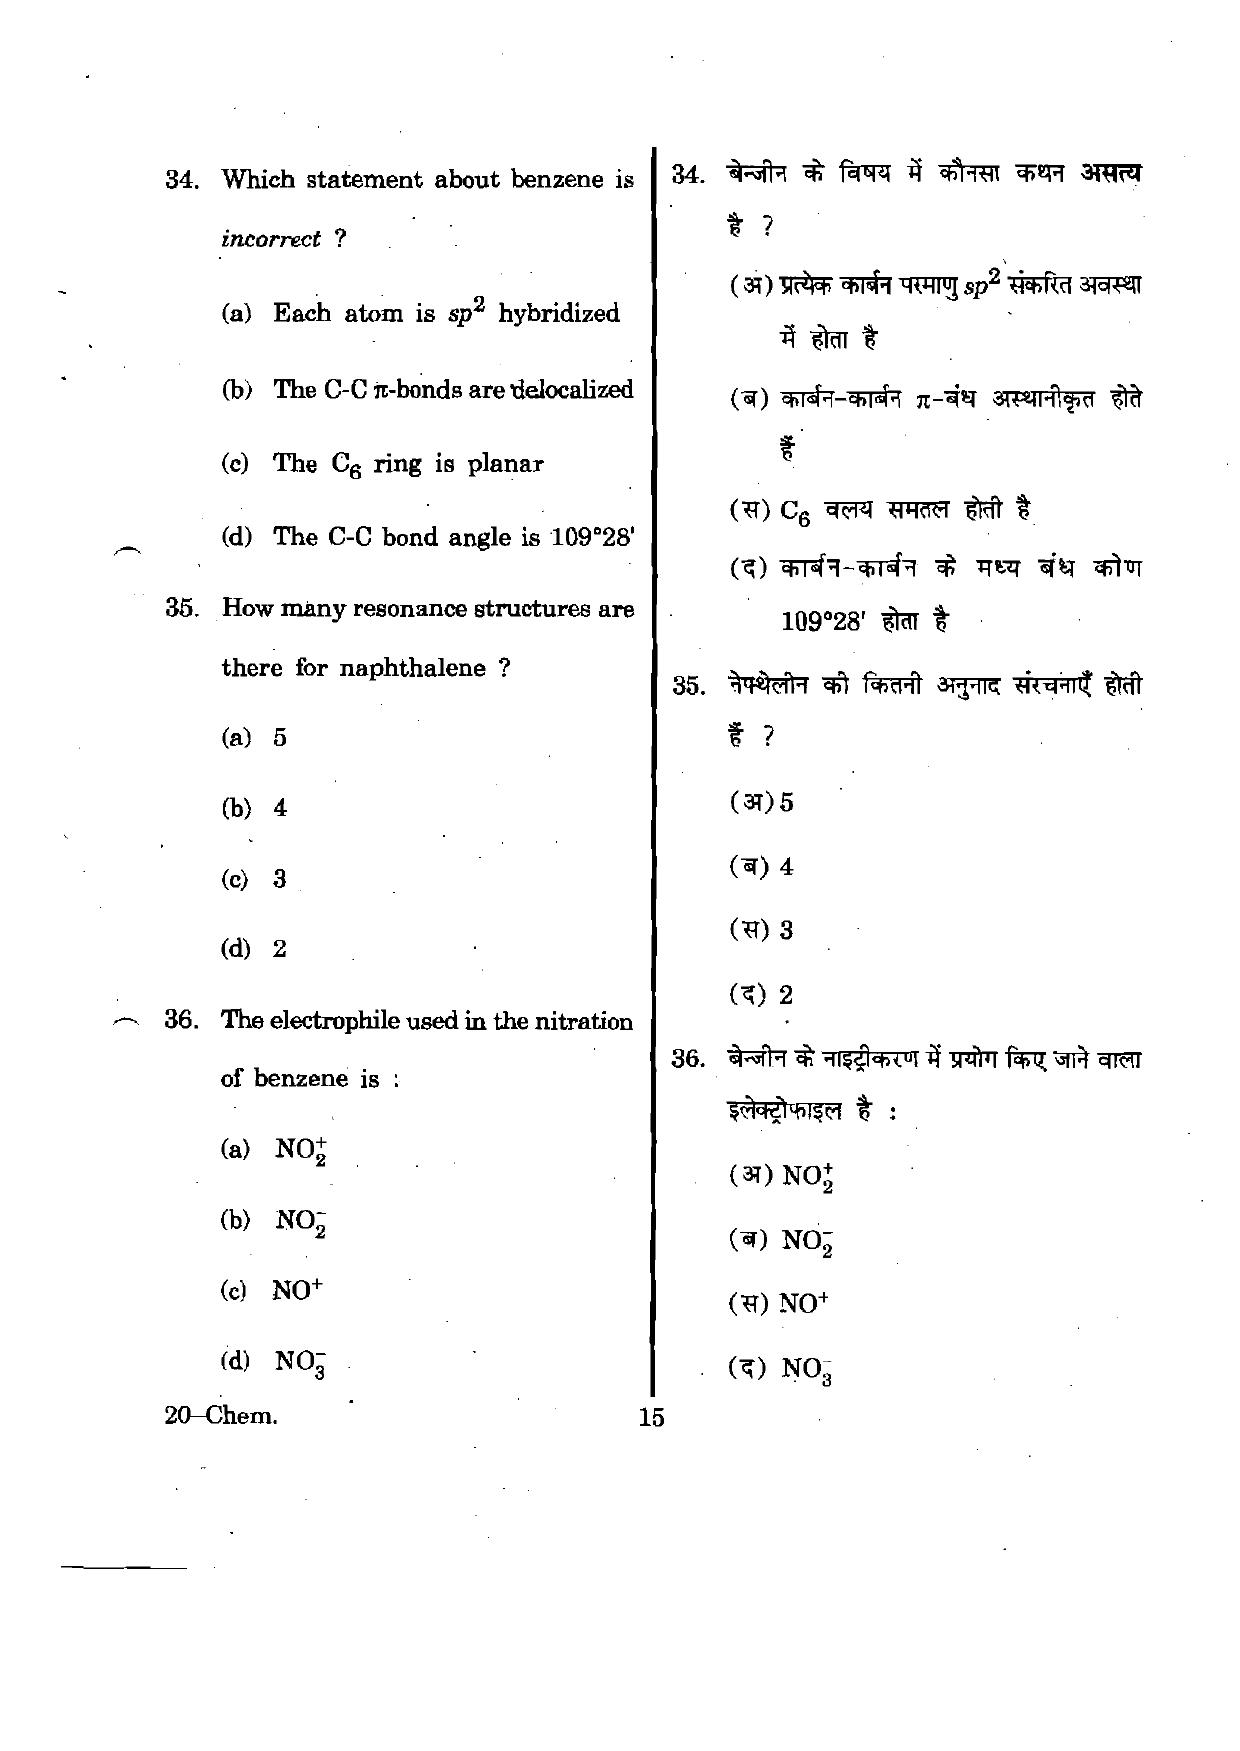 URATPG Chemistry 2012 Question Paper - Page 15